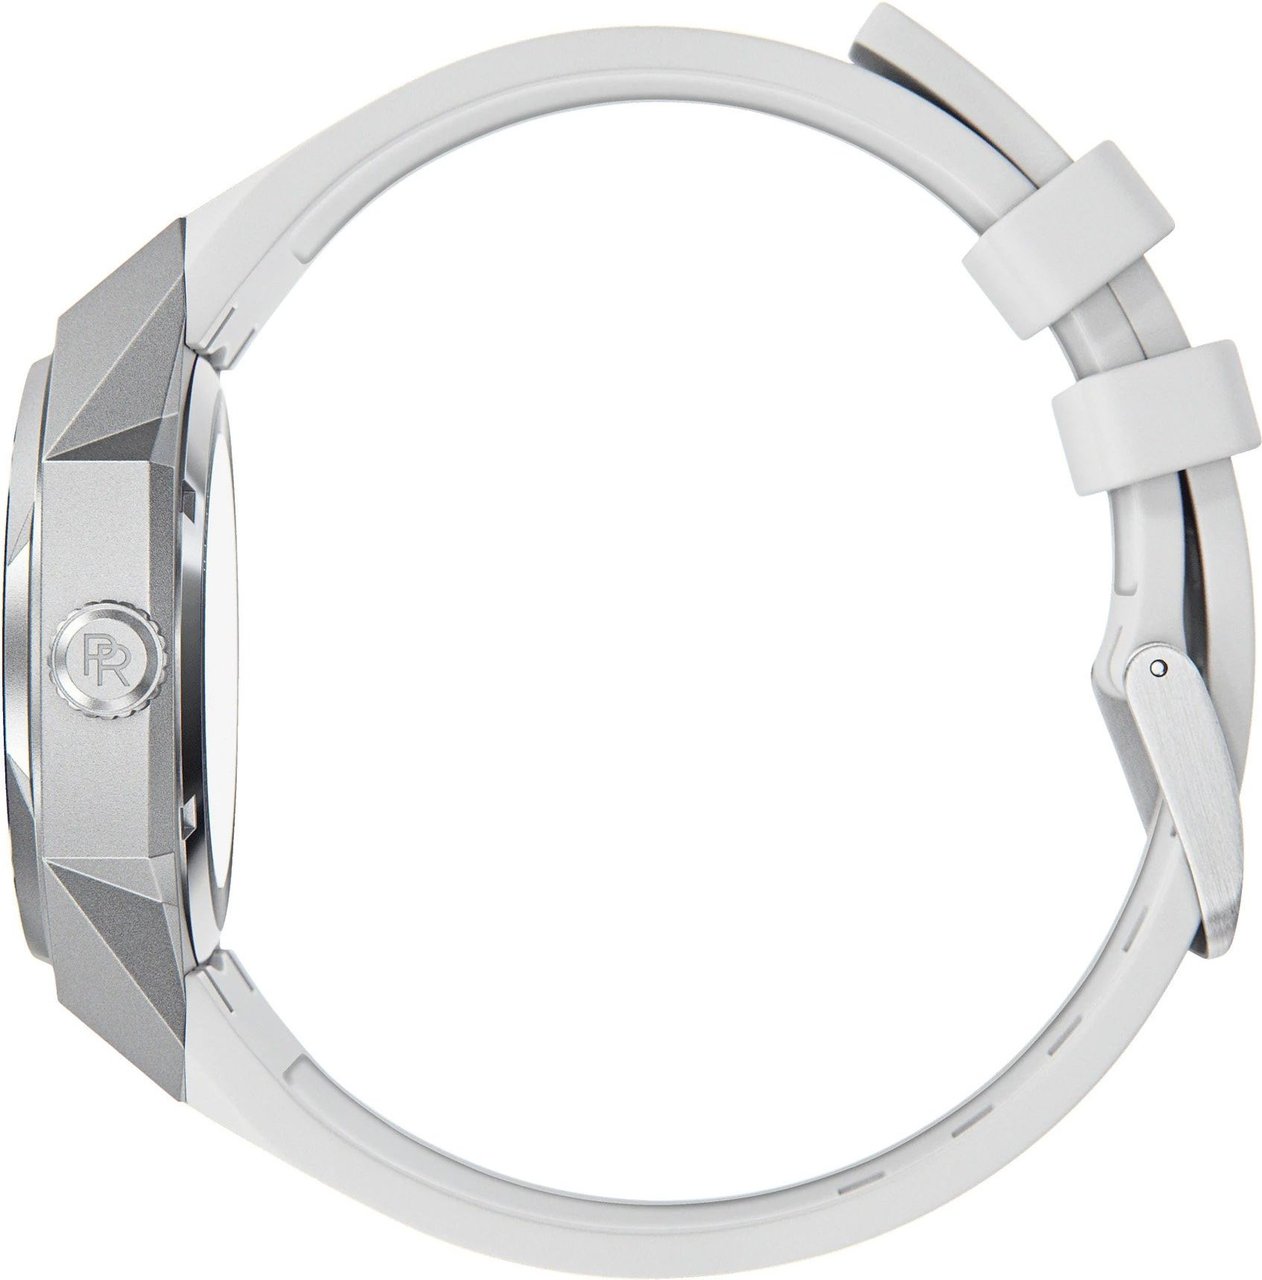 Paul Rich Elements Moonlight Crystal Rubber ELE02R-A horloge Wit